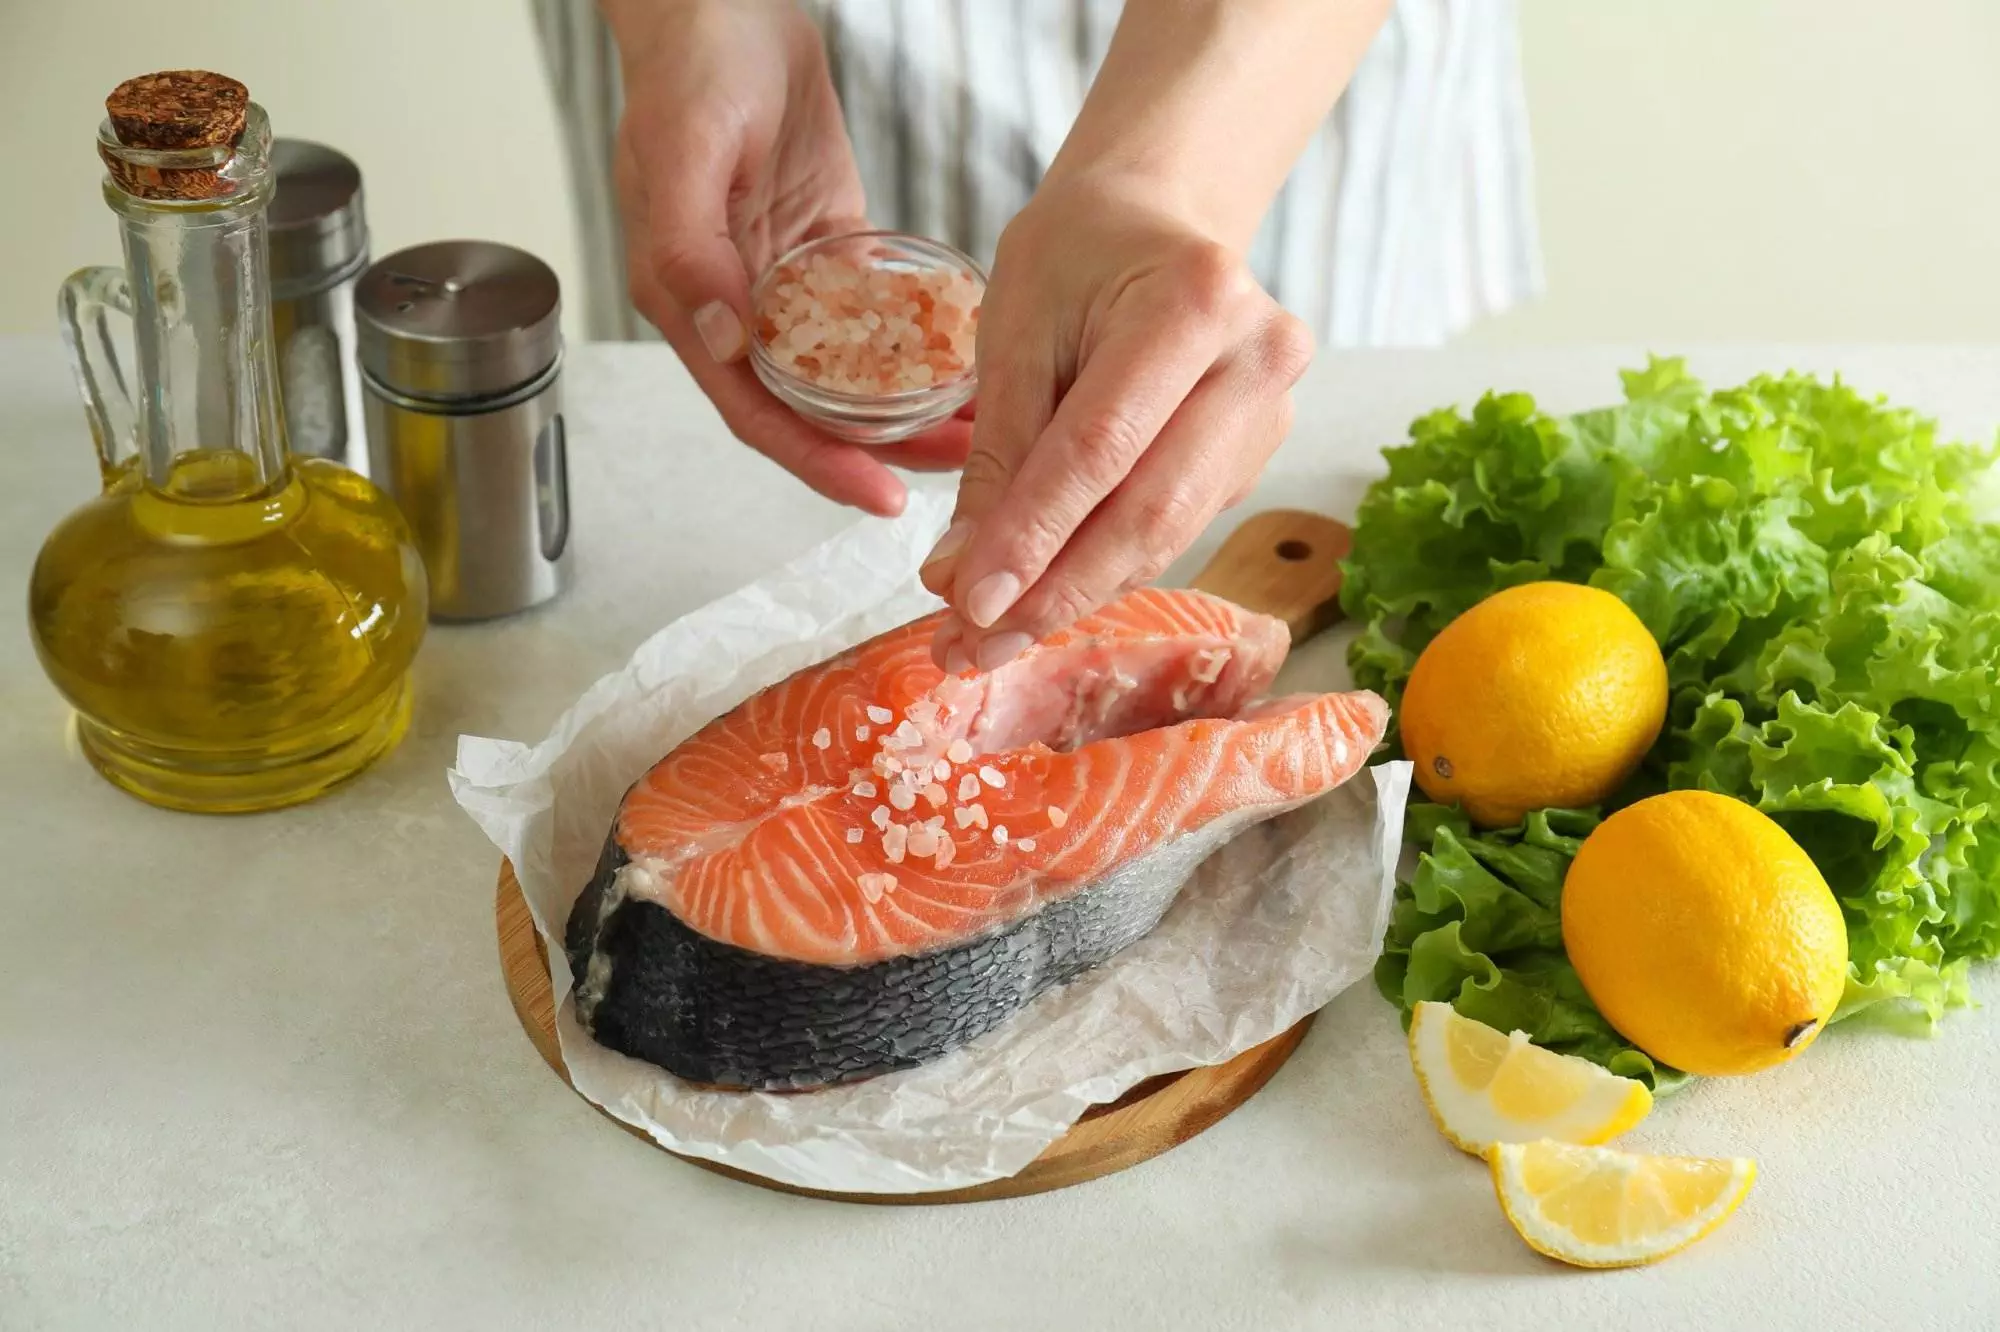 Seasoning fresh salmon with salt for cooking.